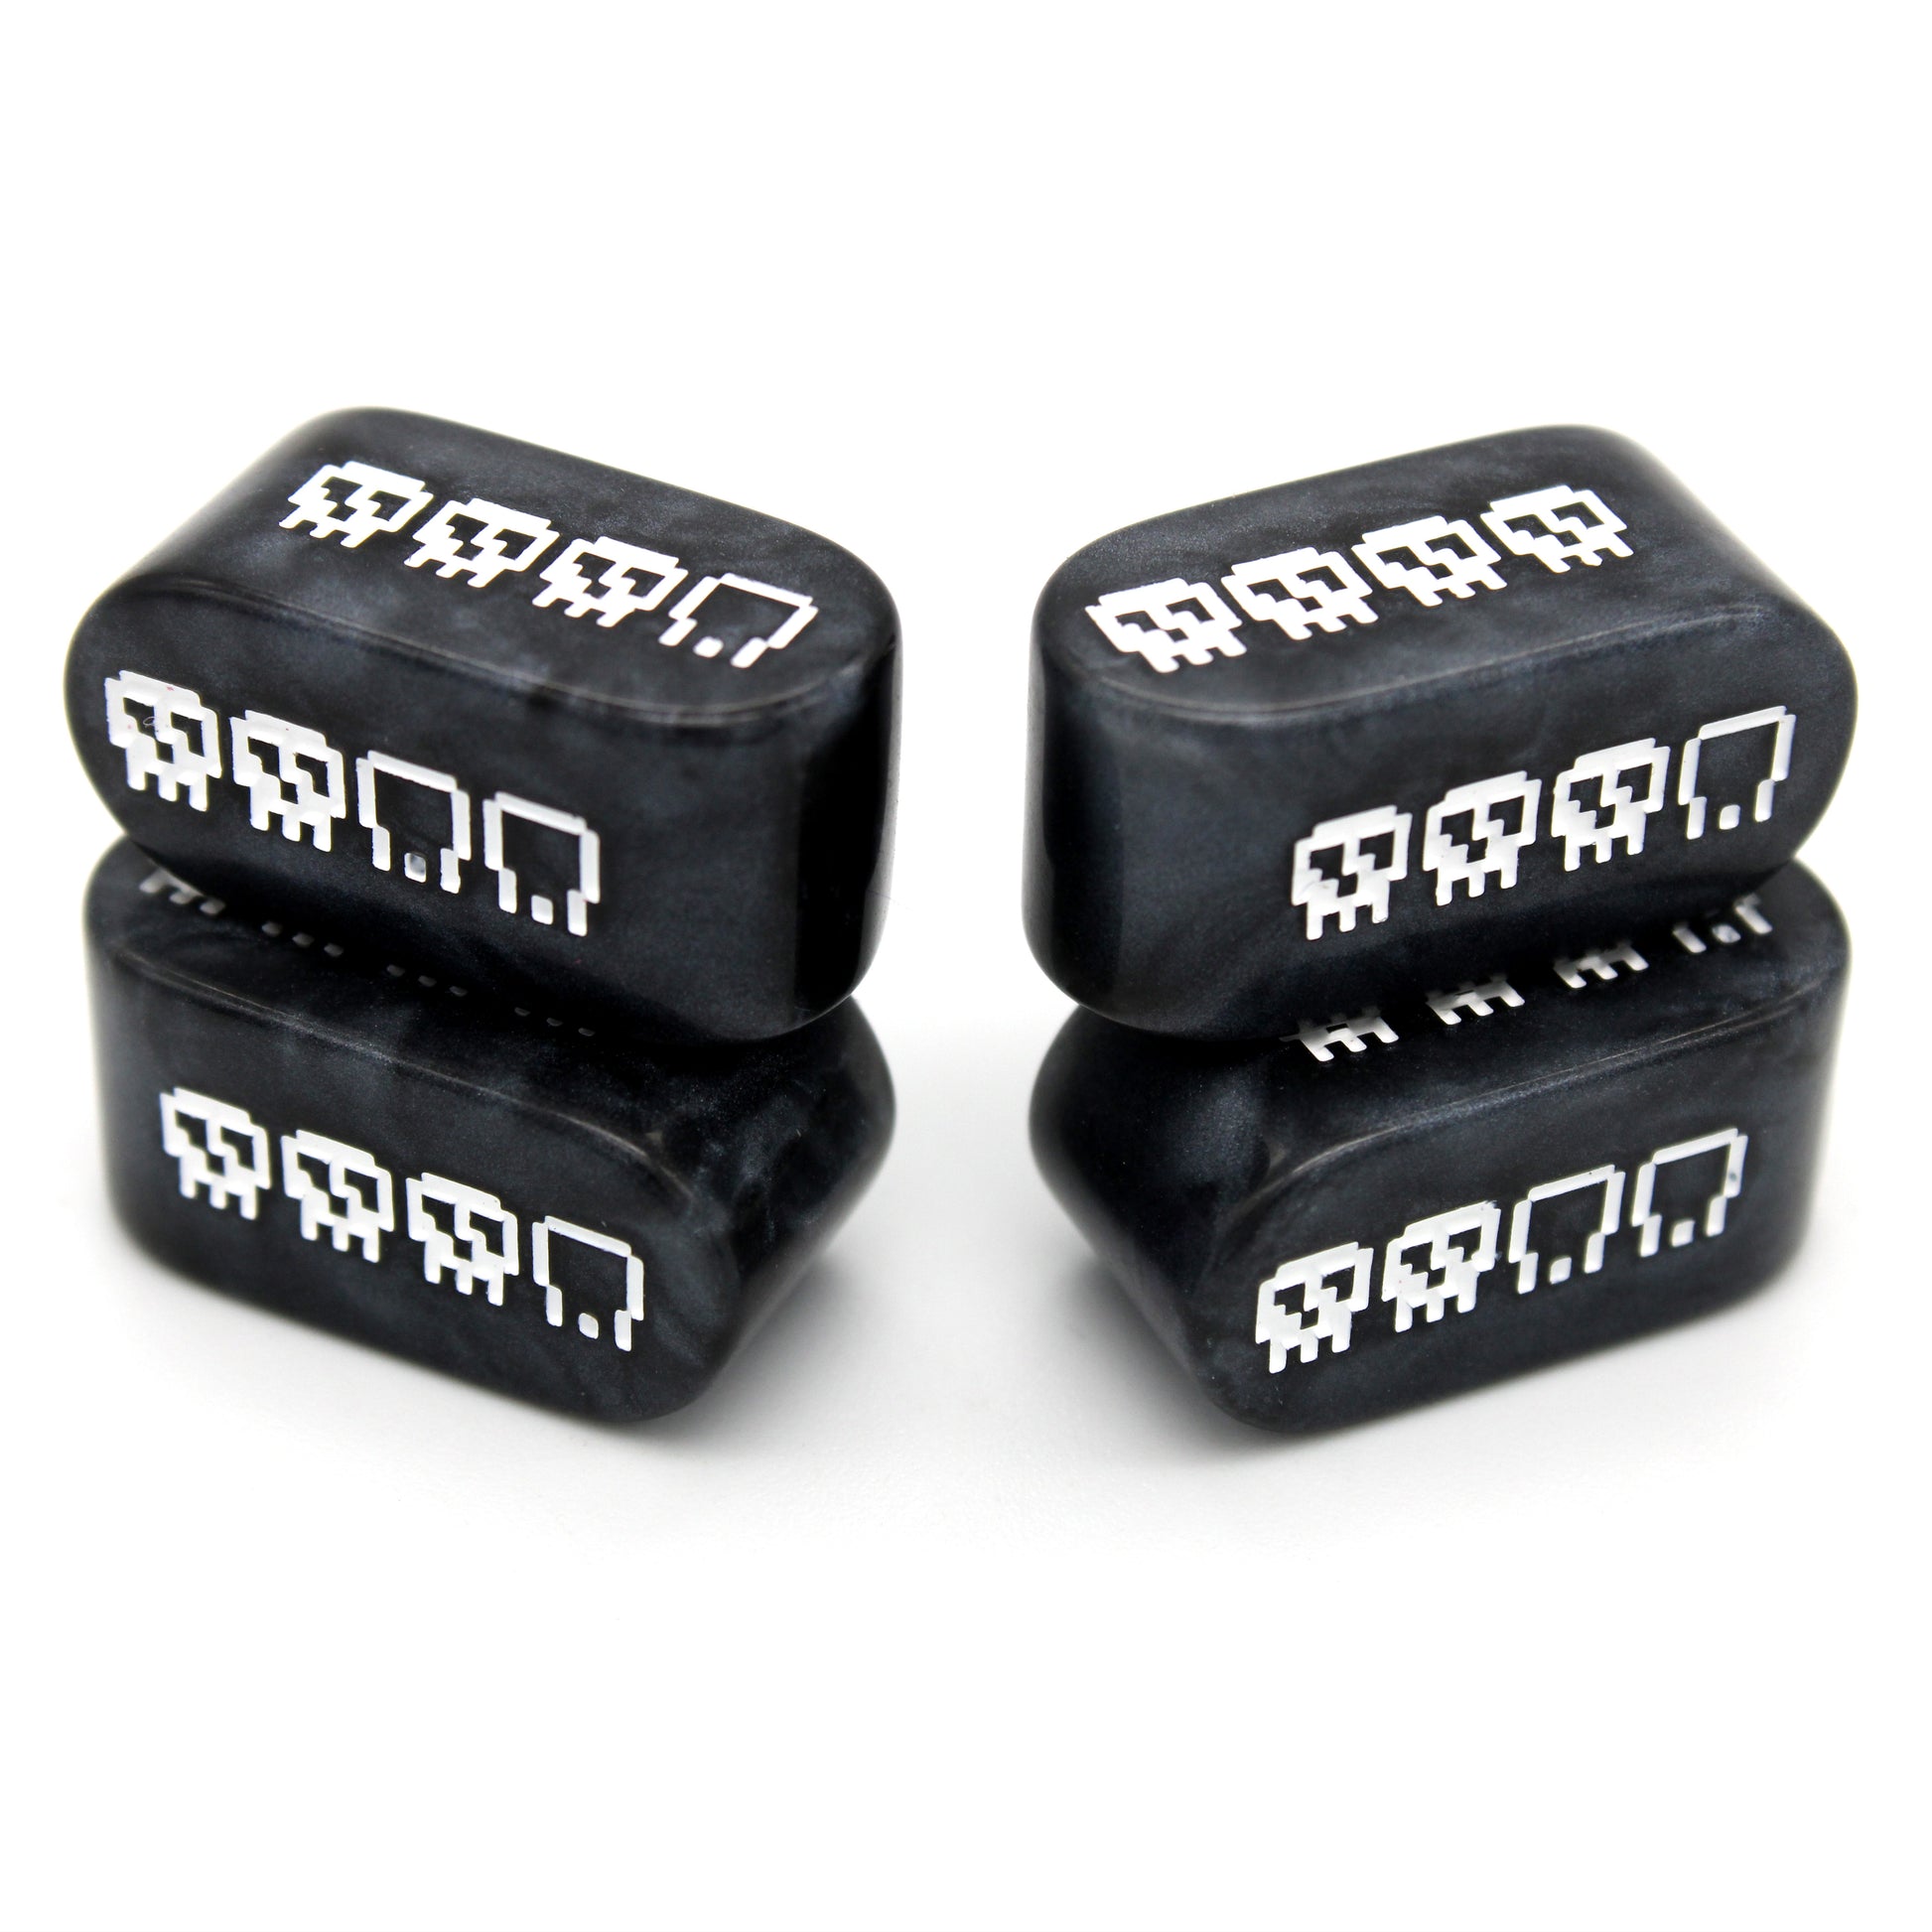 Pixel Skulls: Vanilla Goth are custom black resin Infinity d4s inked in bone white.